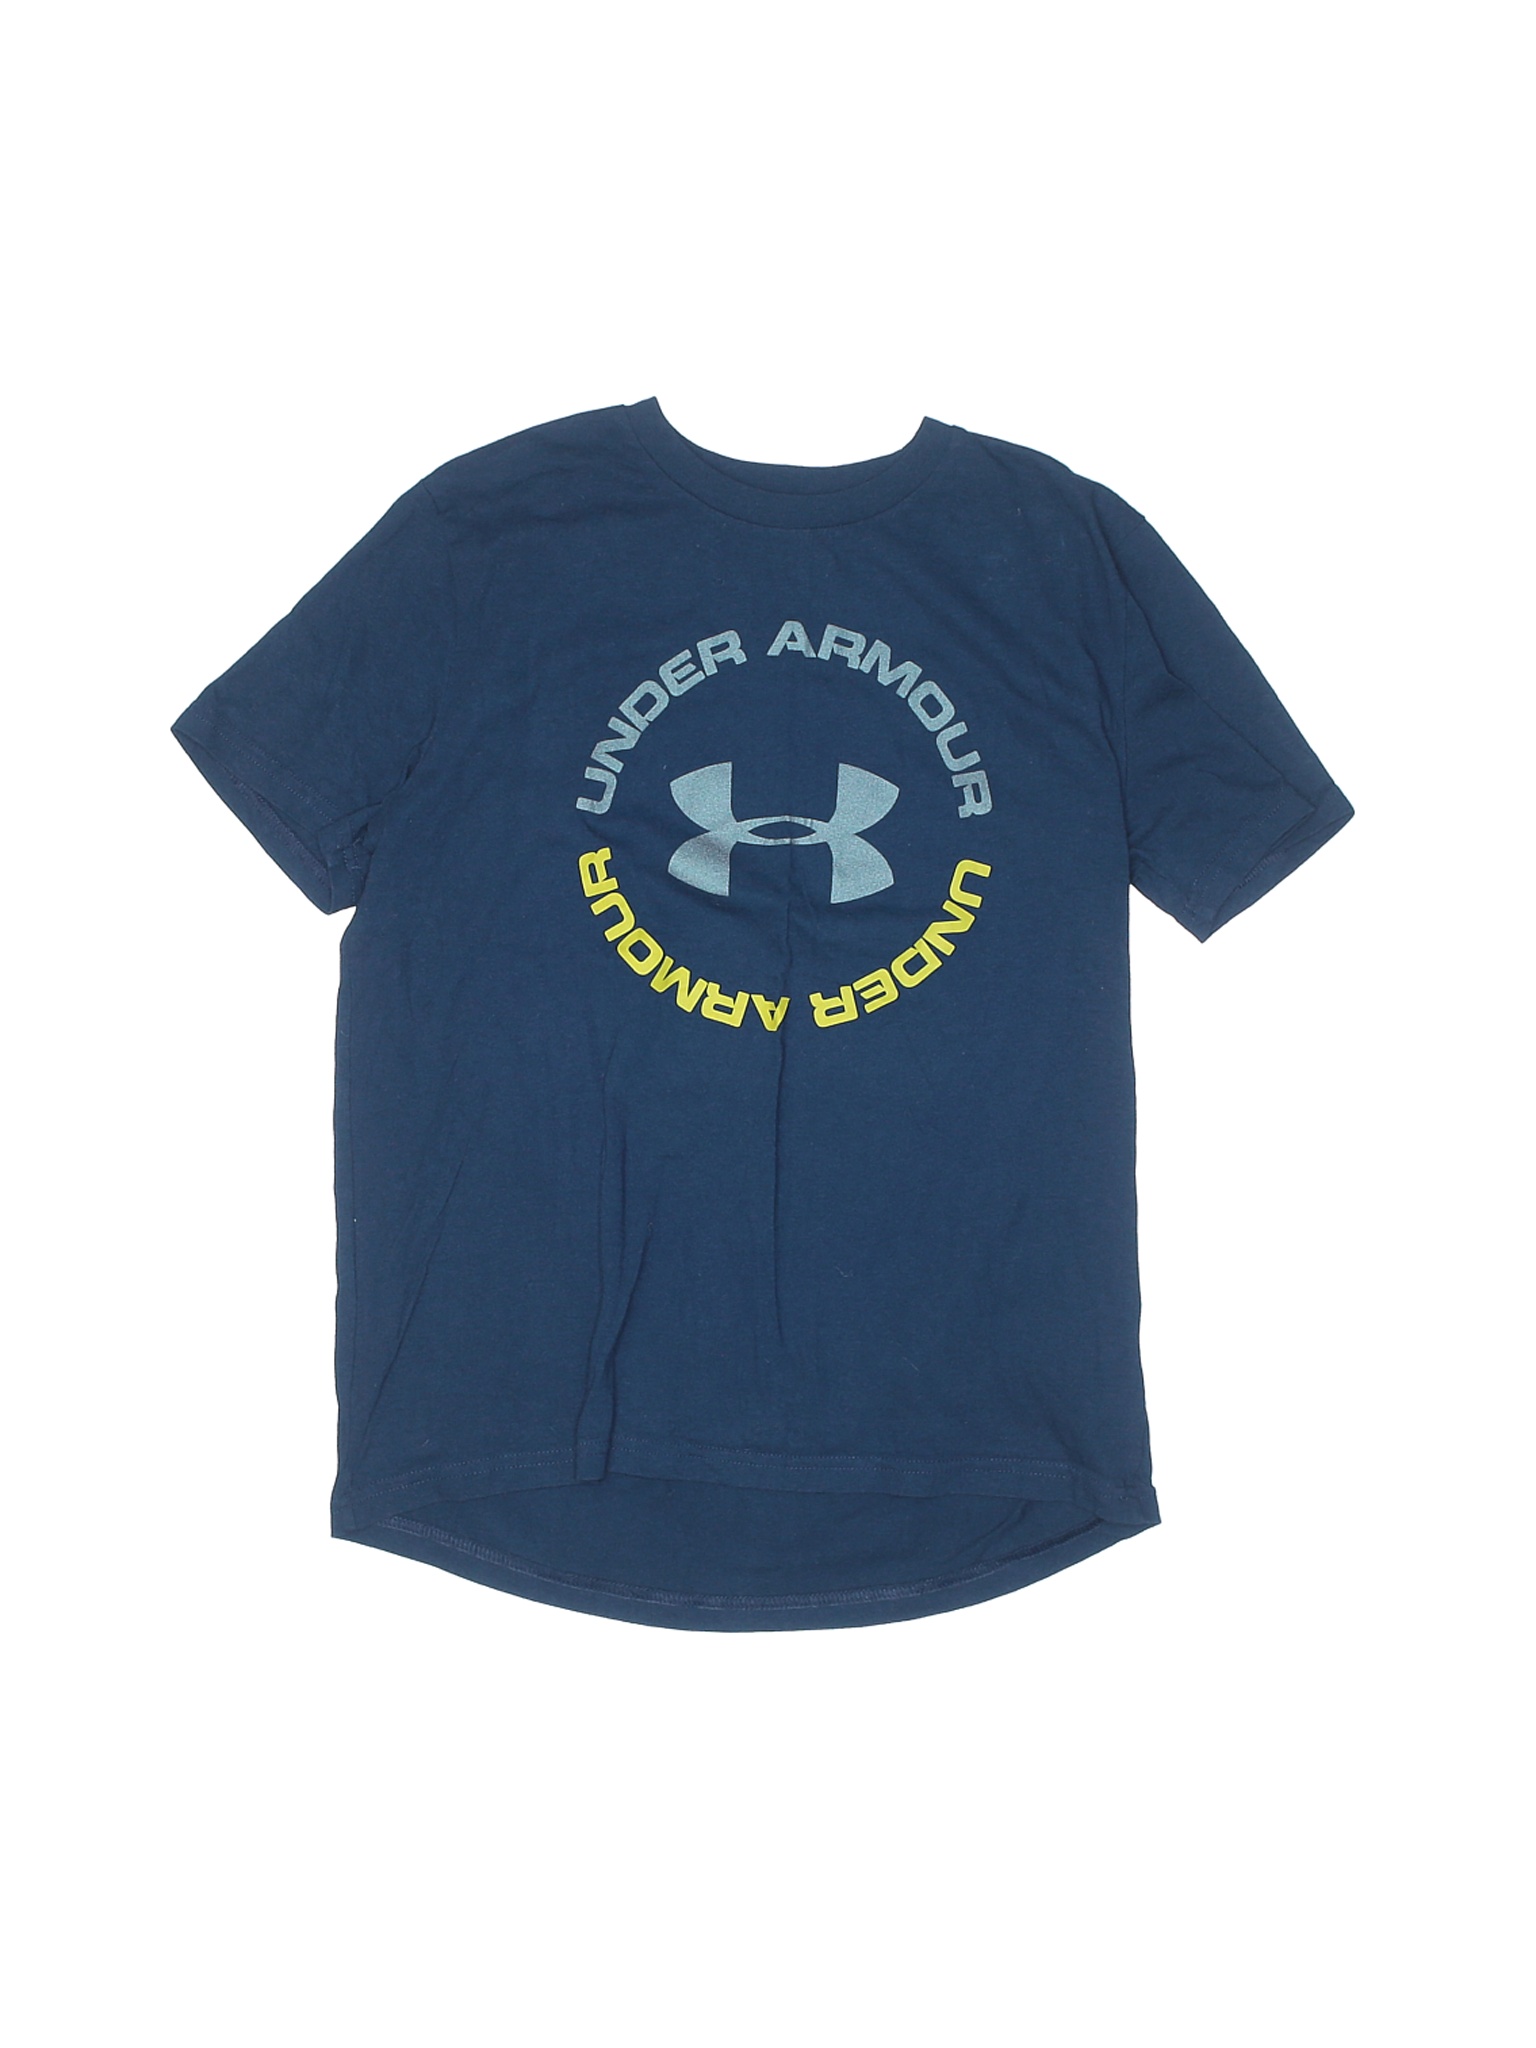 Heat Gear by Under Armour Boys Blue Active T-Shirt XL Youth | eBay